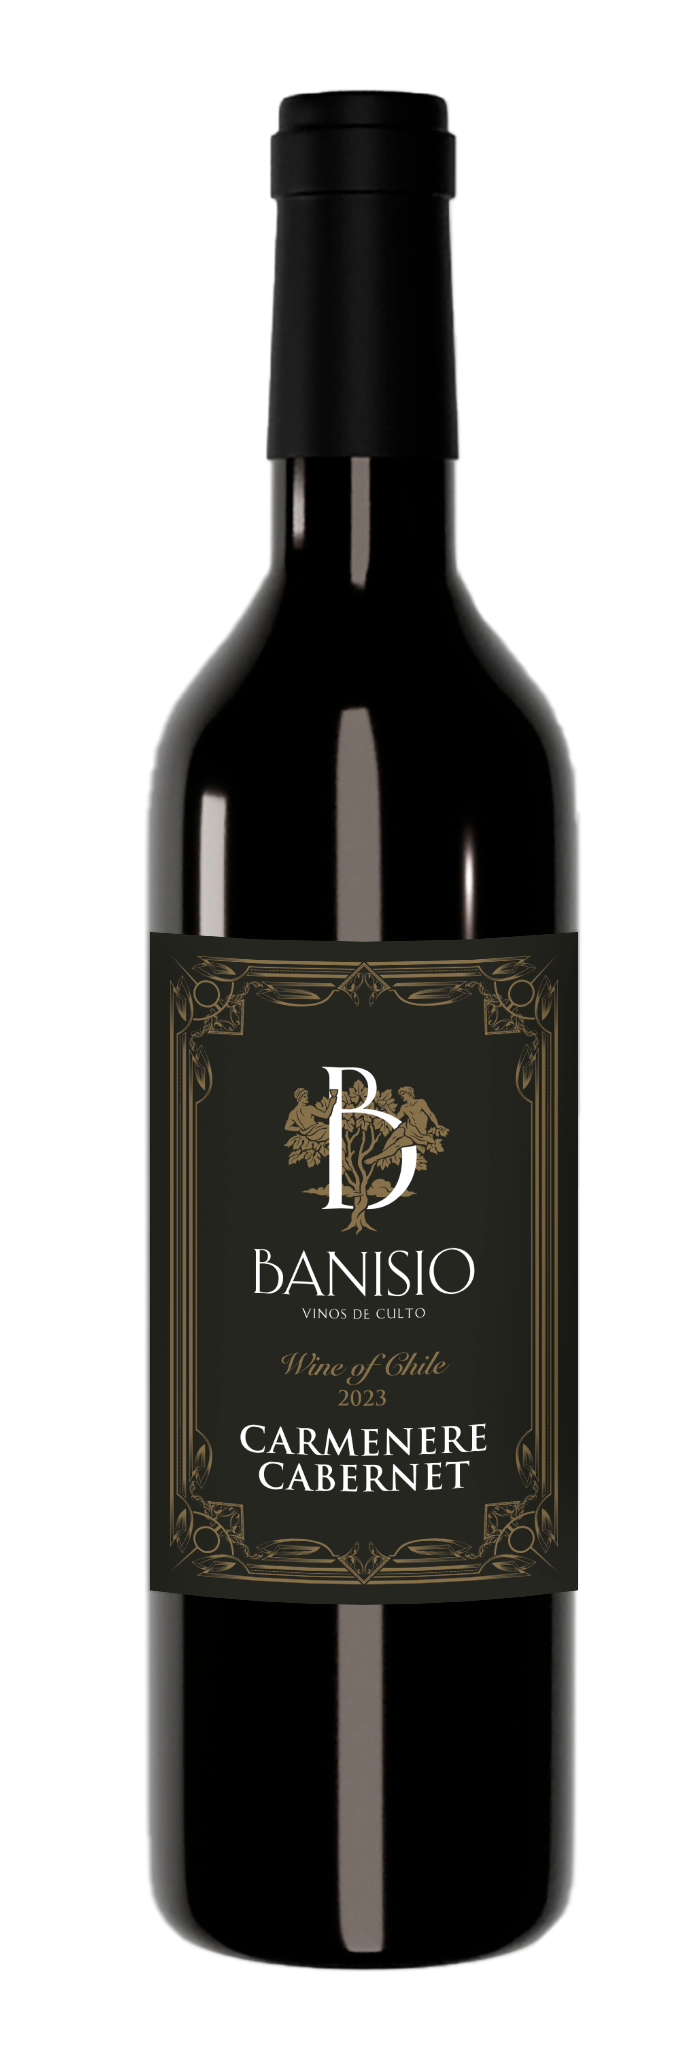 Wine from Chile, Carmenere Cabernet – Banisio